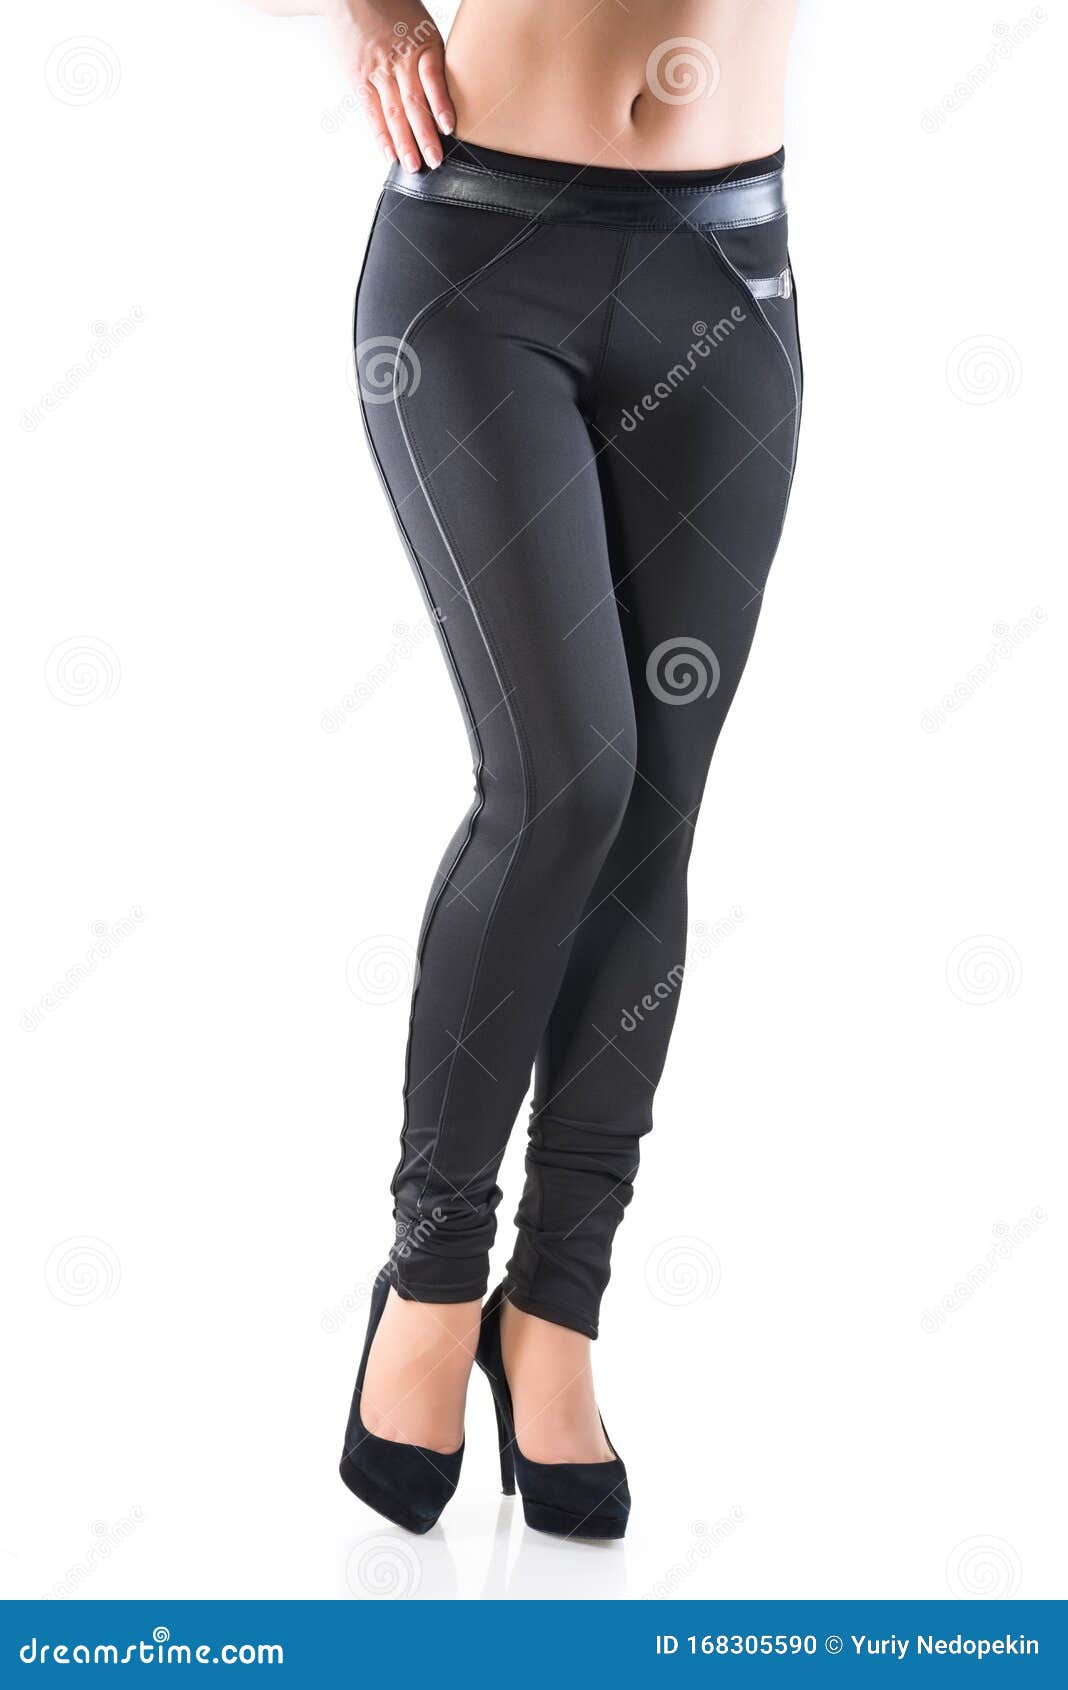 https://thumbs.dreamstime.com/z/beautiful-young-woman-ripped-leggings-legs-beautiful-young-woman-ripped-leggings-heels-white-background-168305590.jpg